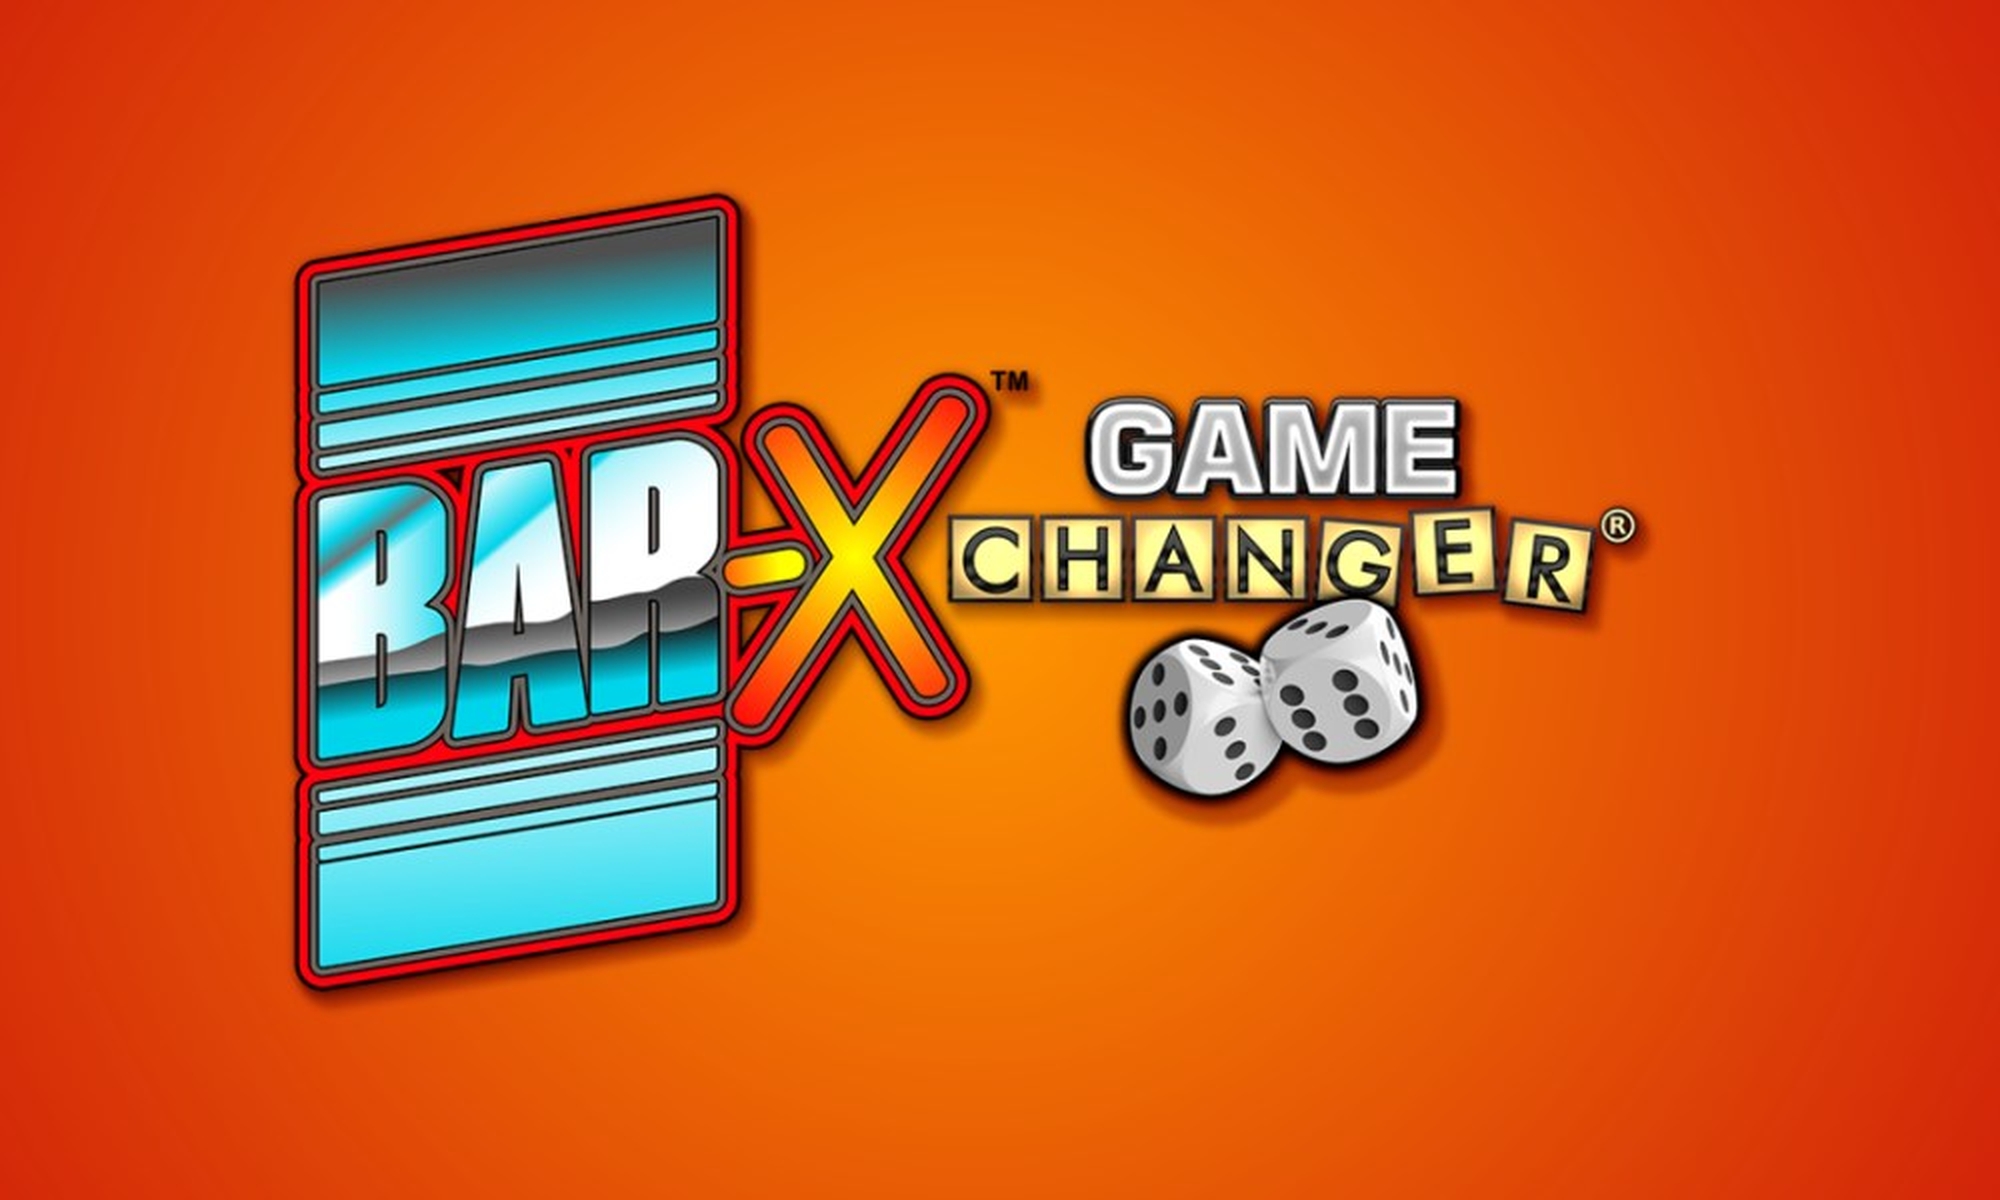 Bar X Game Changer demo